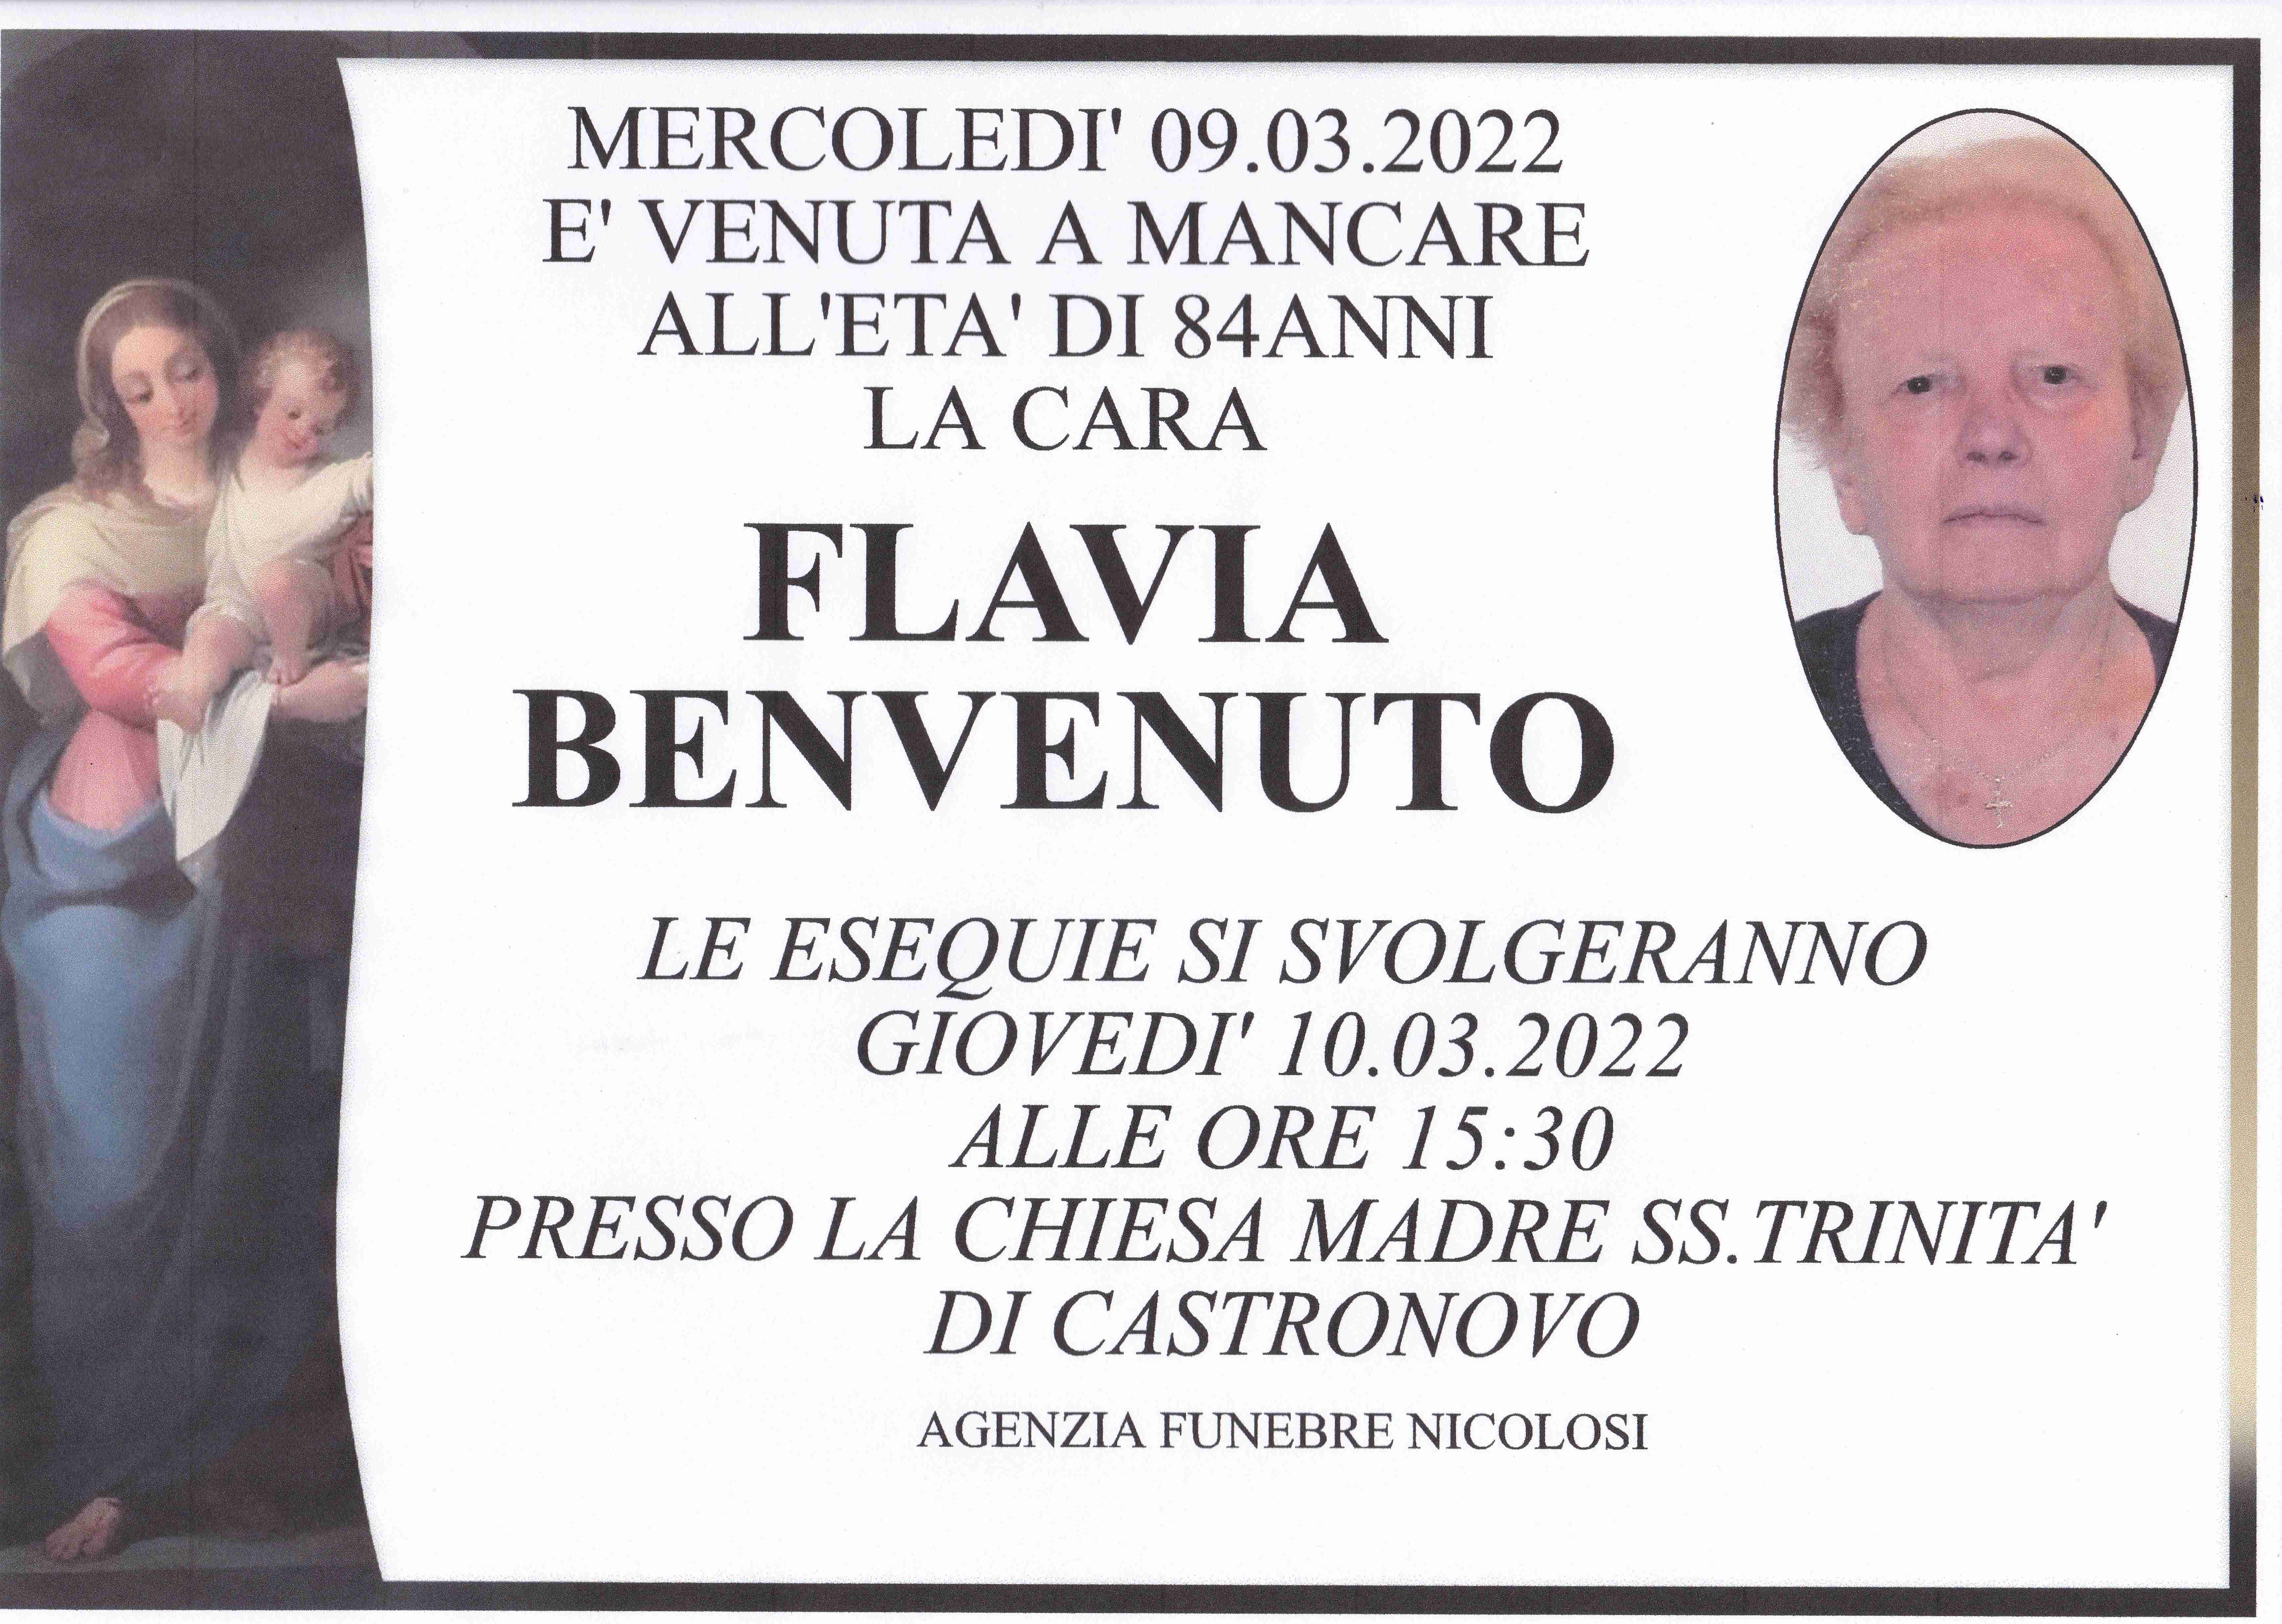 Flavia Benvenuto